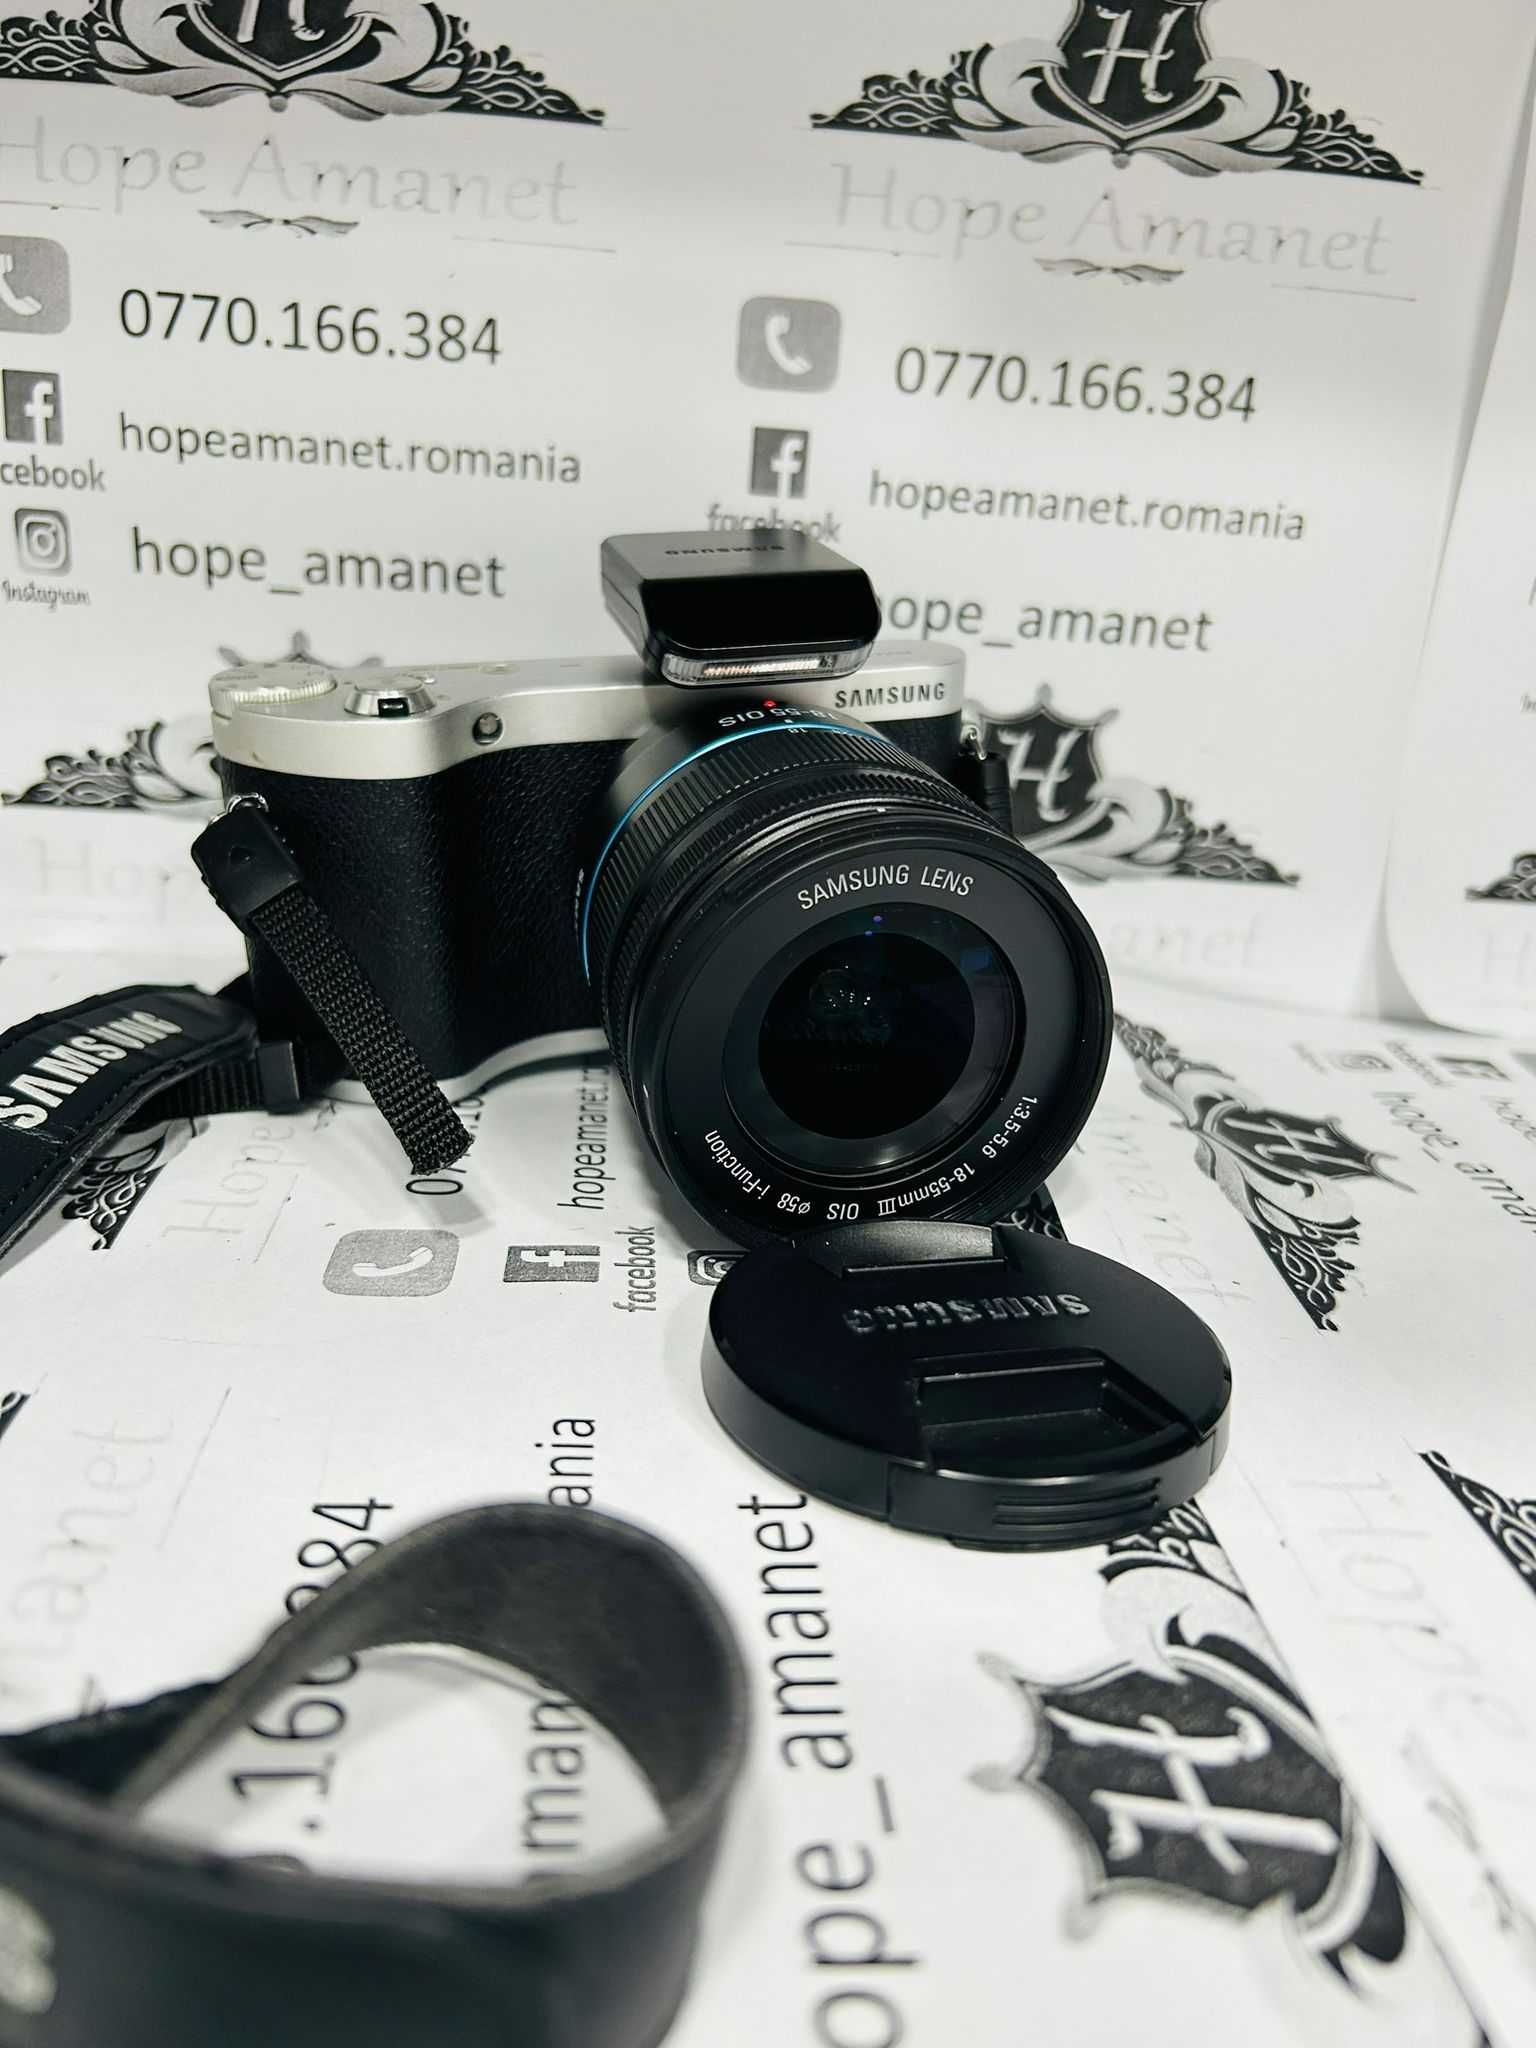 HOPE AMANET P2 - Mirrorless Samsung NX300 + obiectiv 18-55mm